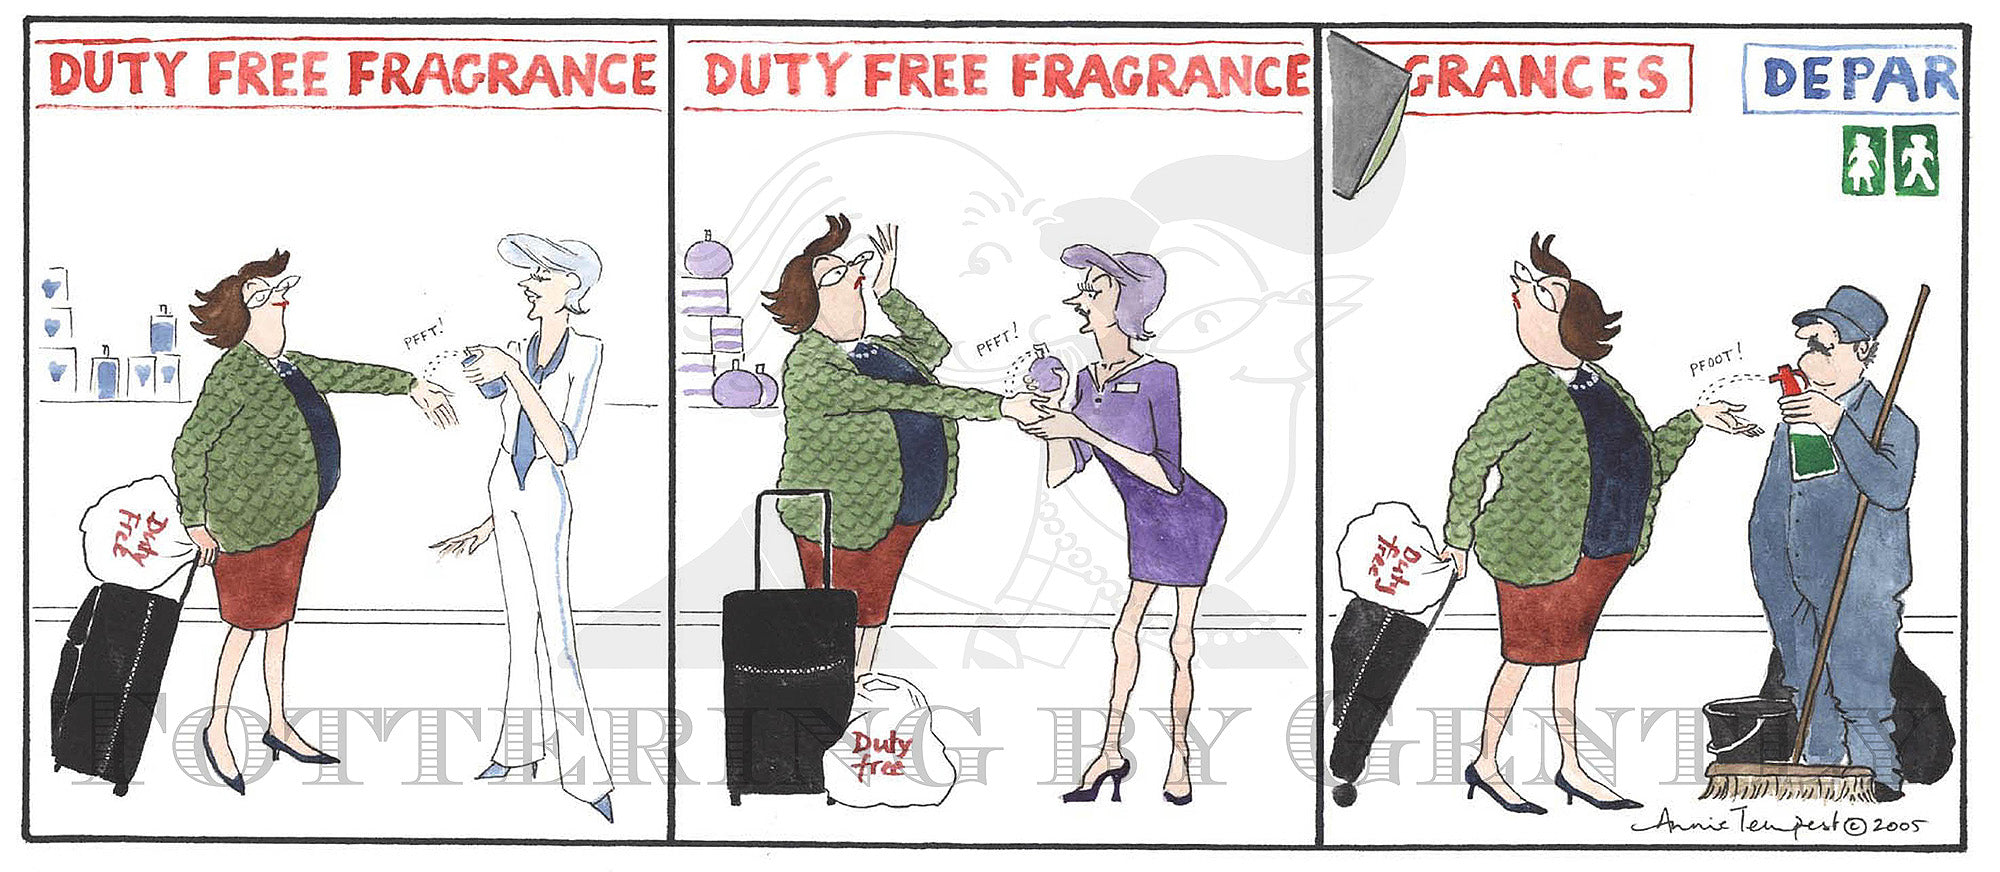 Duty free fragrances (CL614)